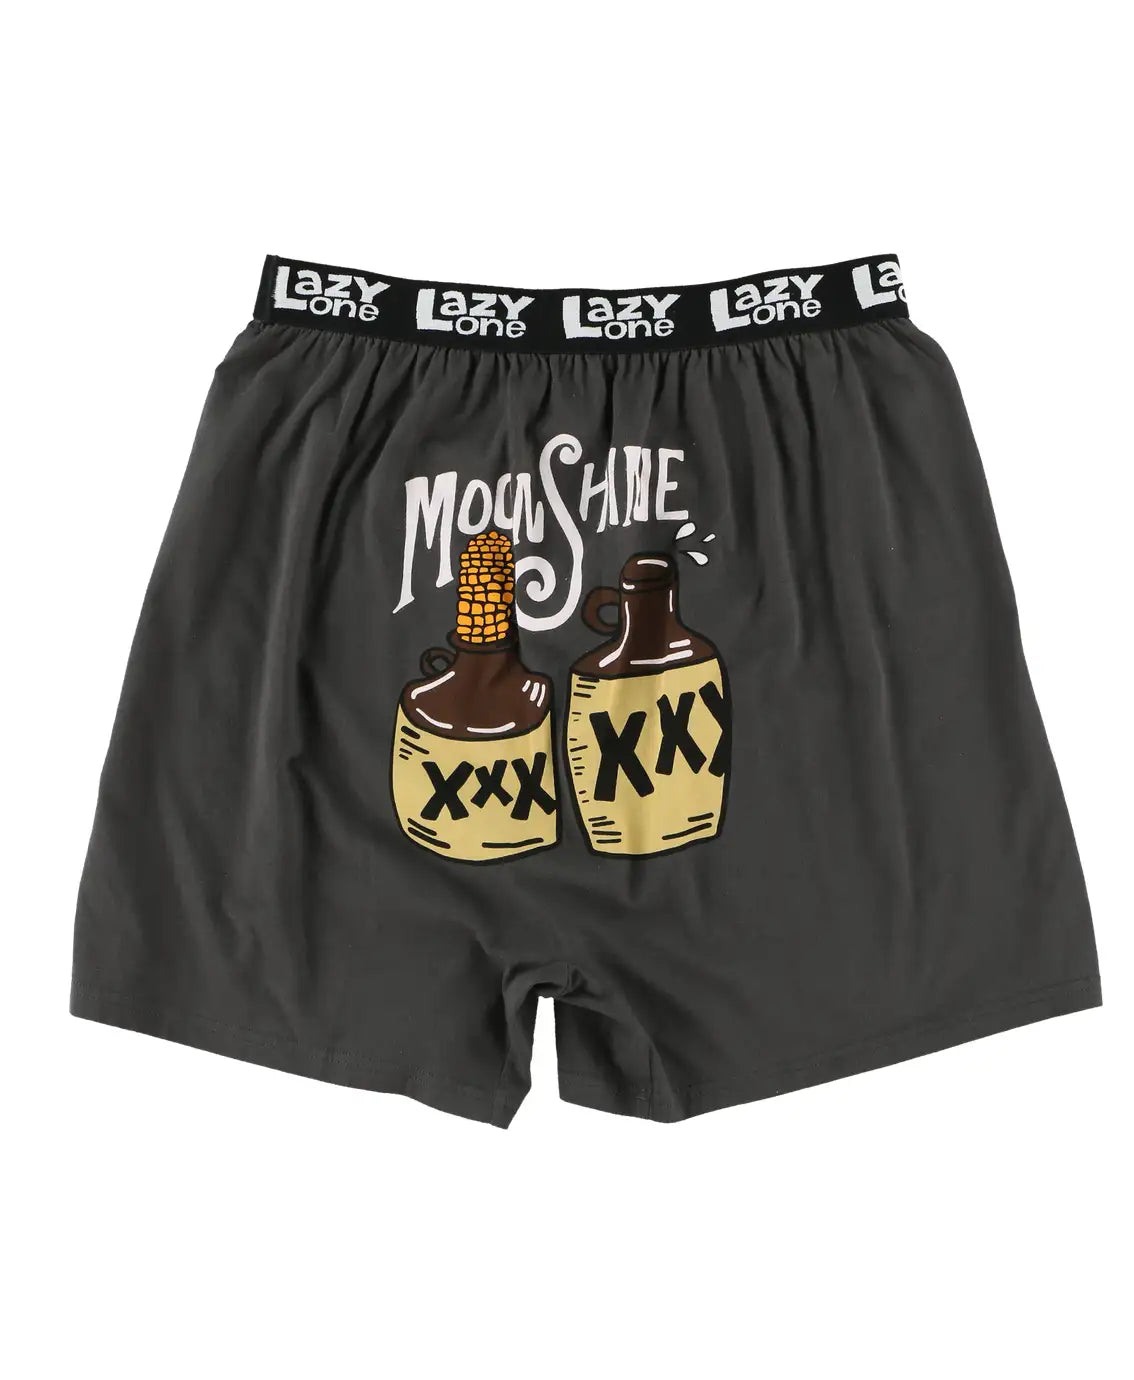 Moonshine Men's Boxers